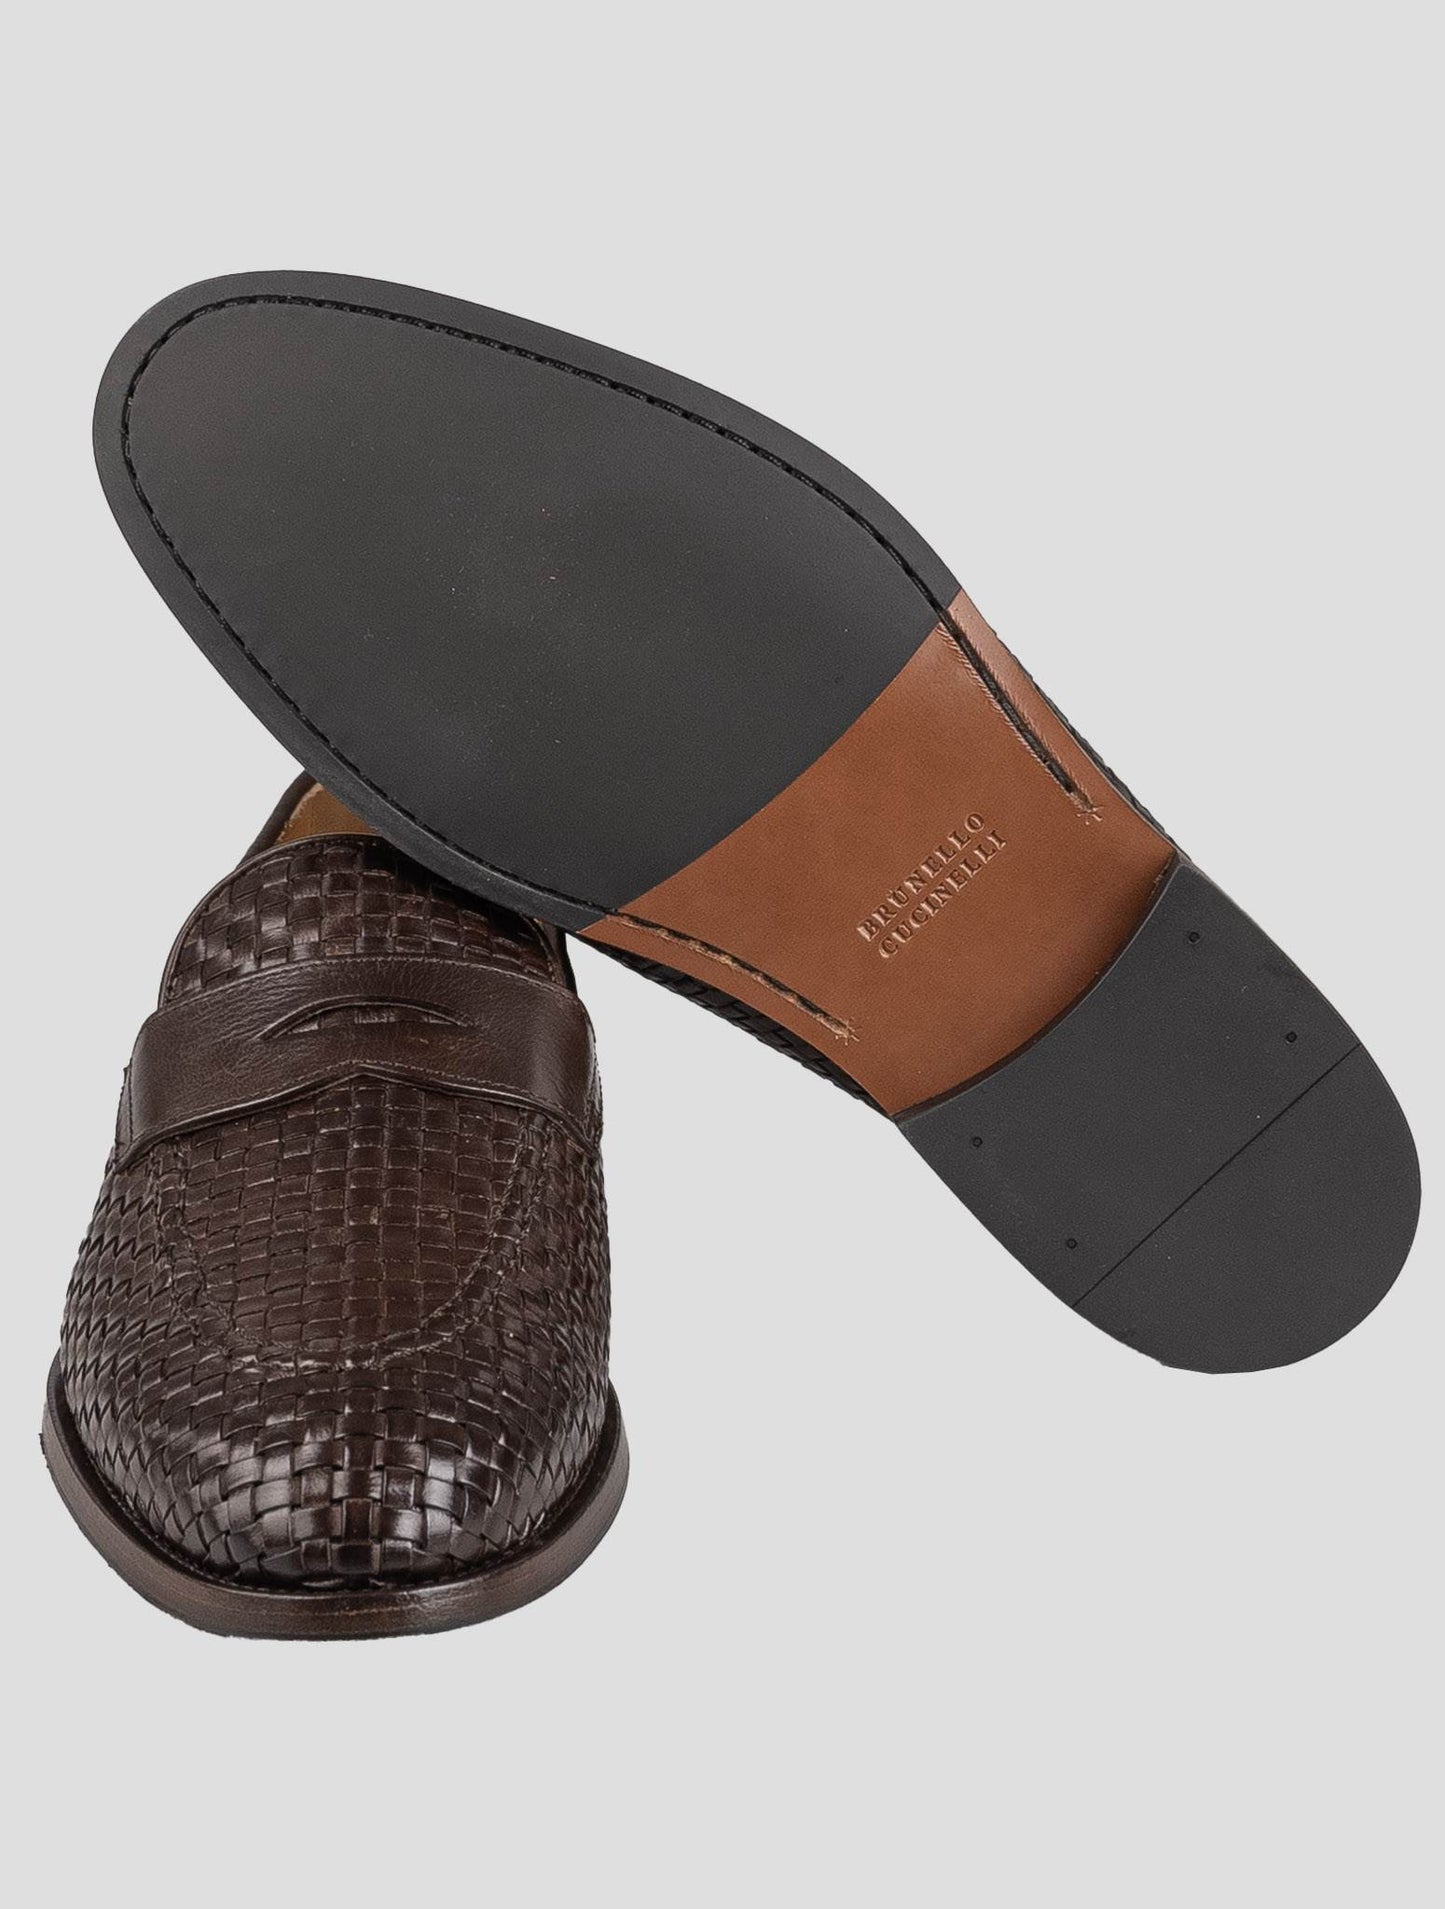 Brunello Cucinelli Dark Brown Leather Loafers